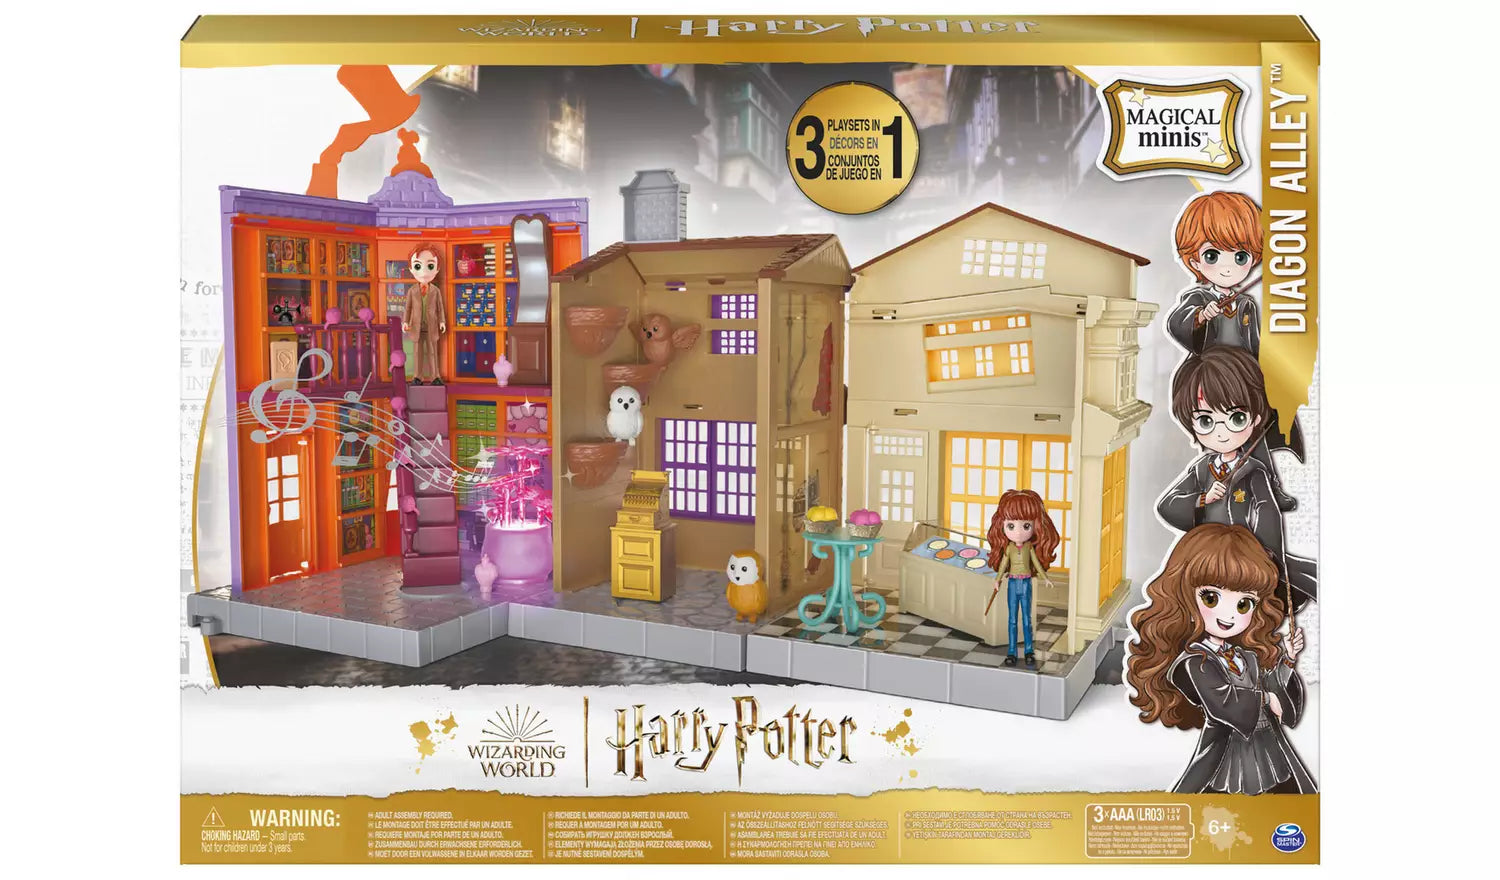 Ww Magical Mini Diagon alley plyst- Harry & Fred